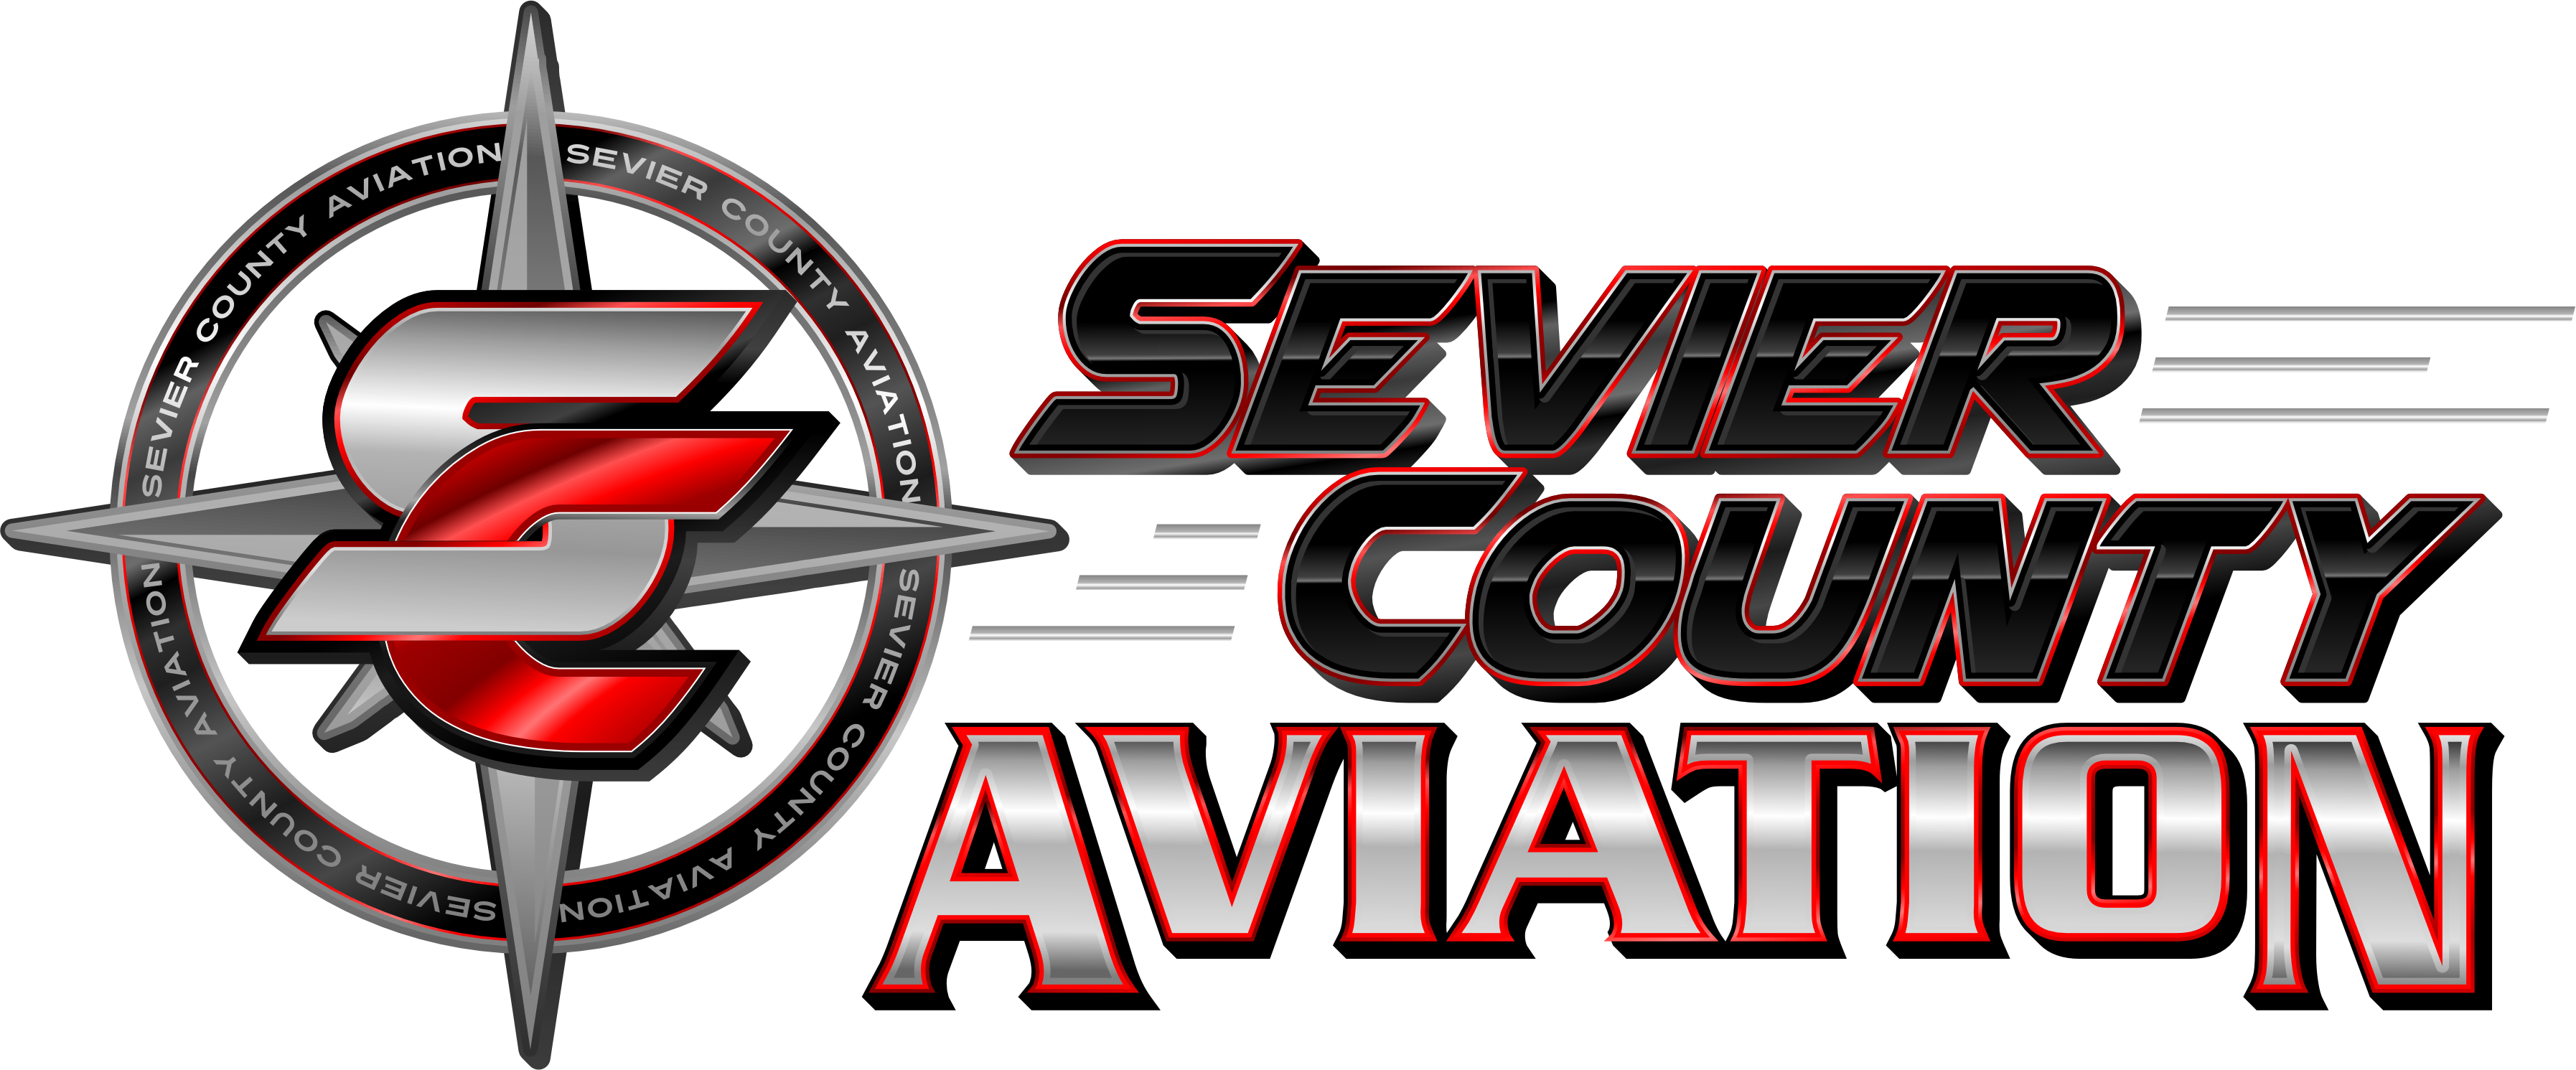 Sevier County Aviation